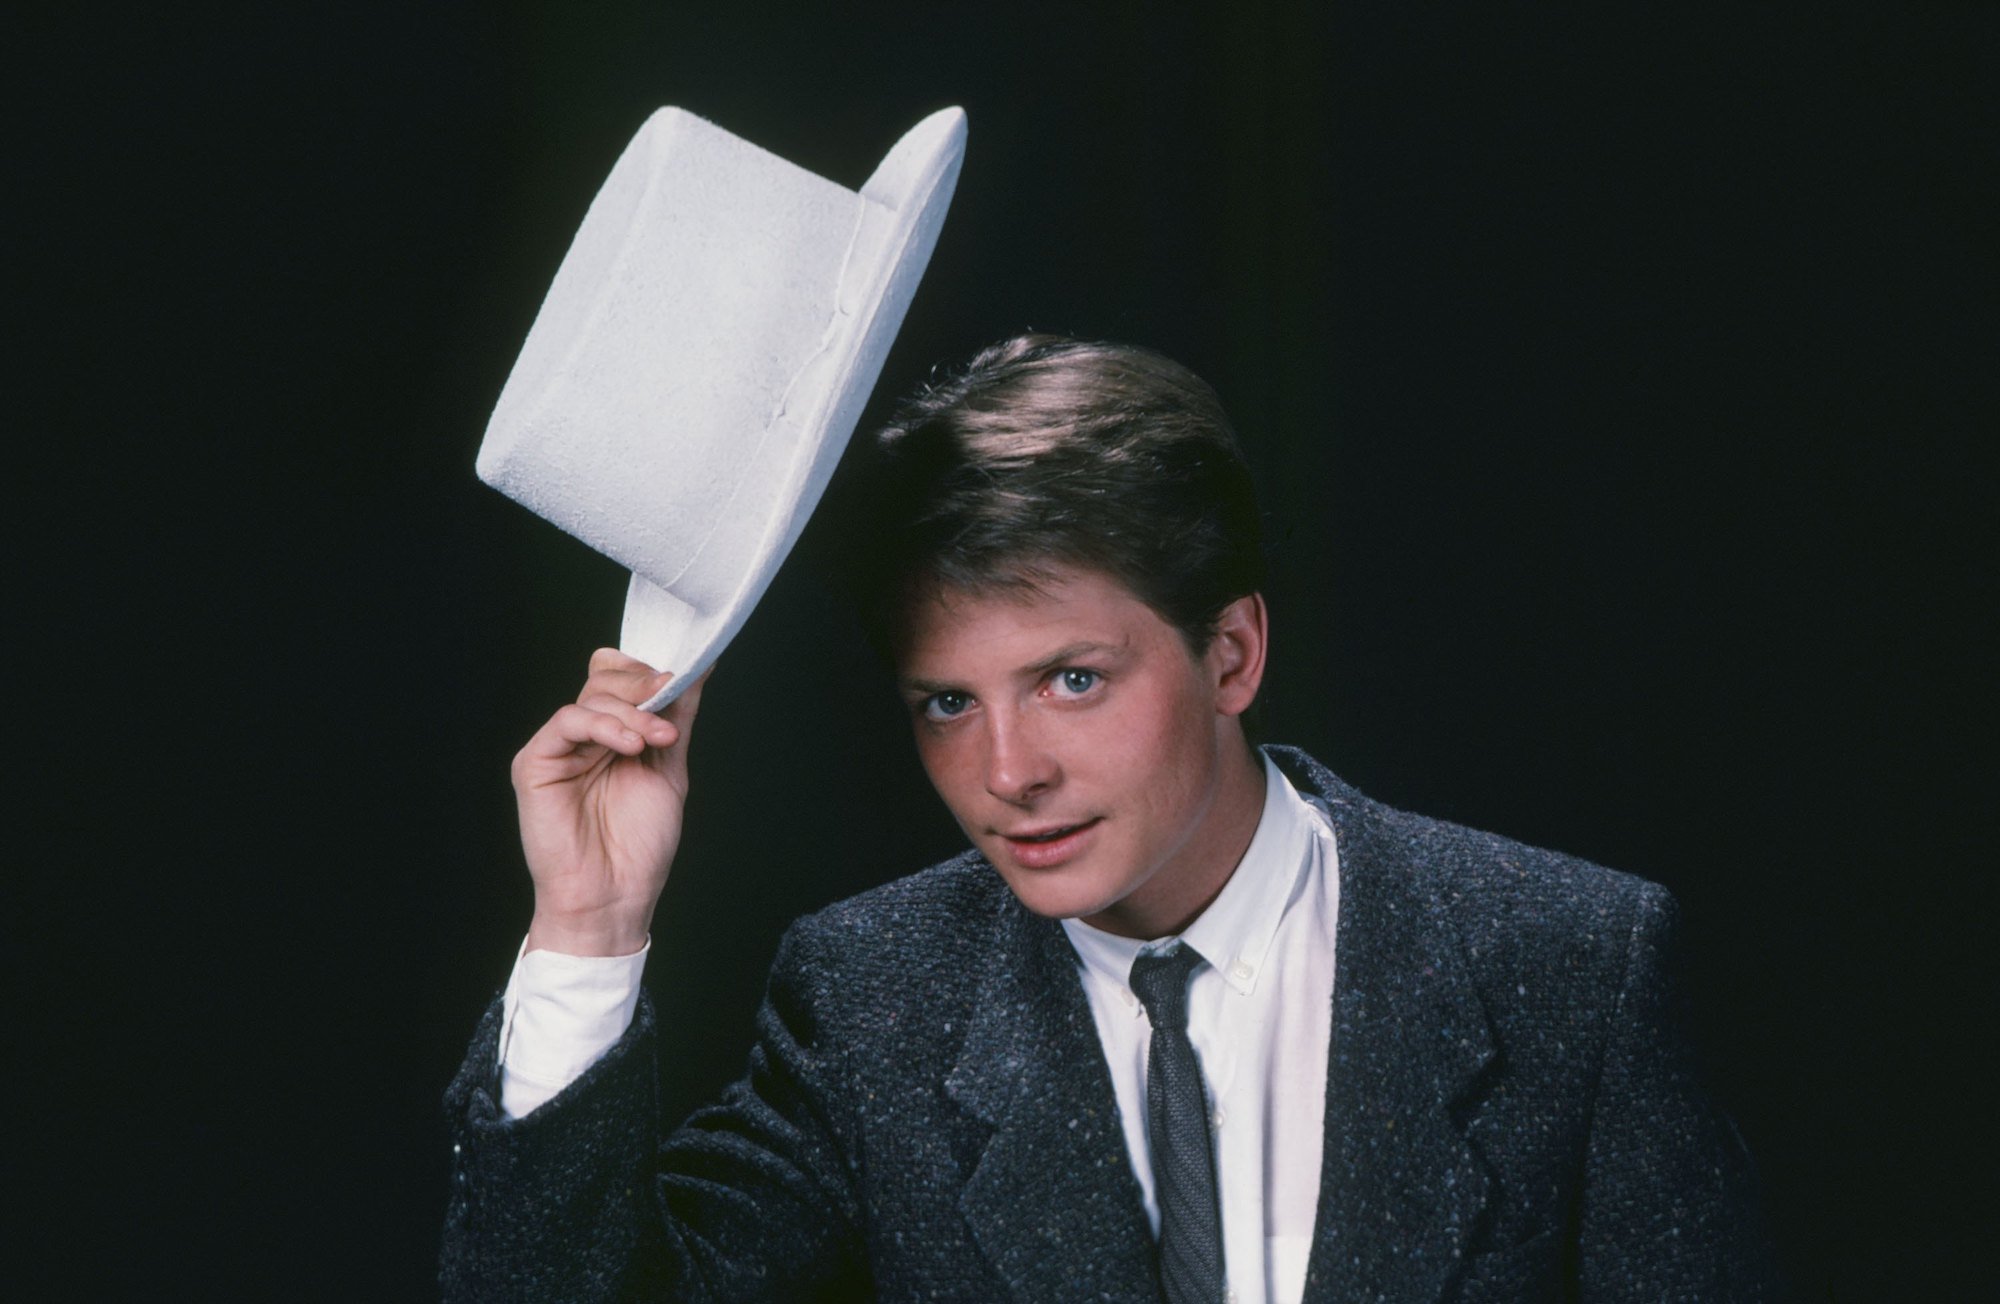 Michael J. Fox as Alex P. Keaton, tipping a top hat